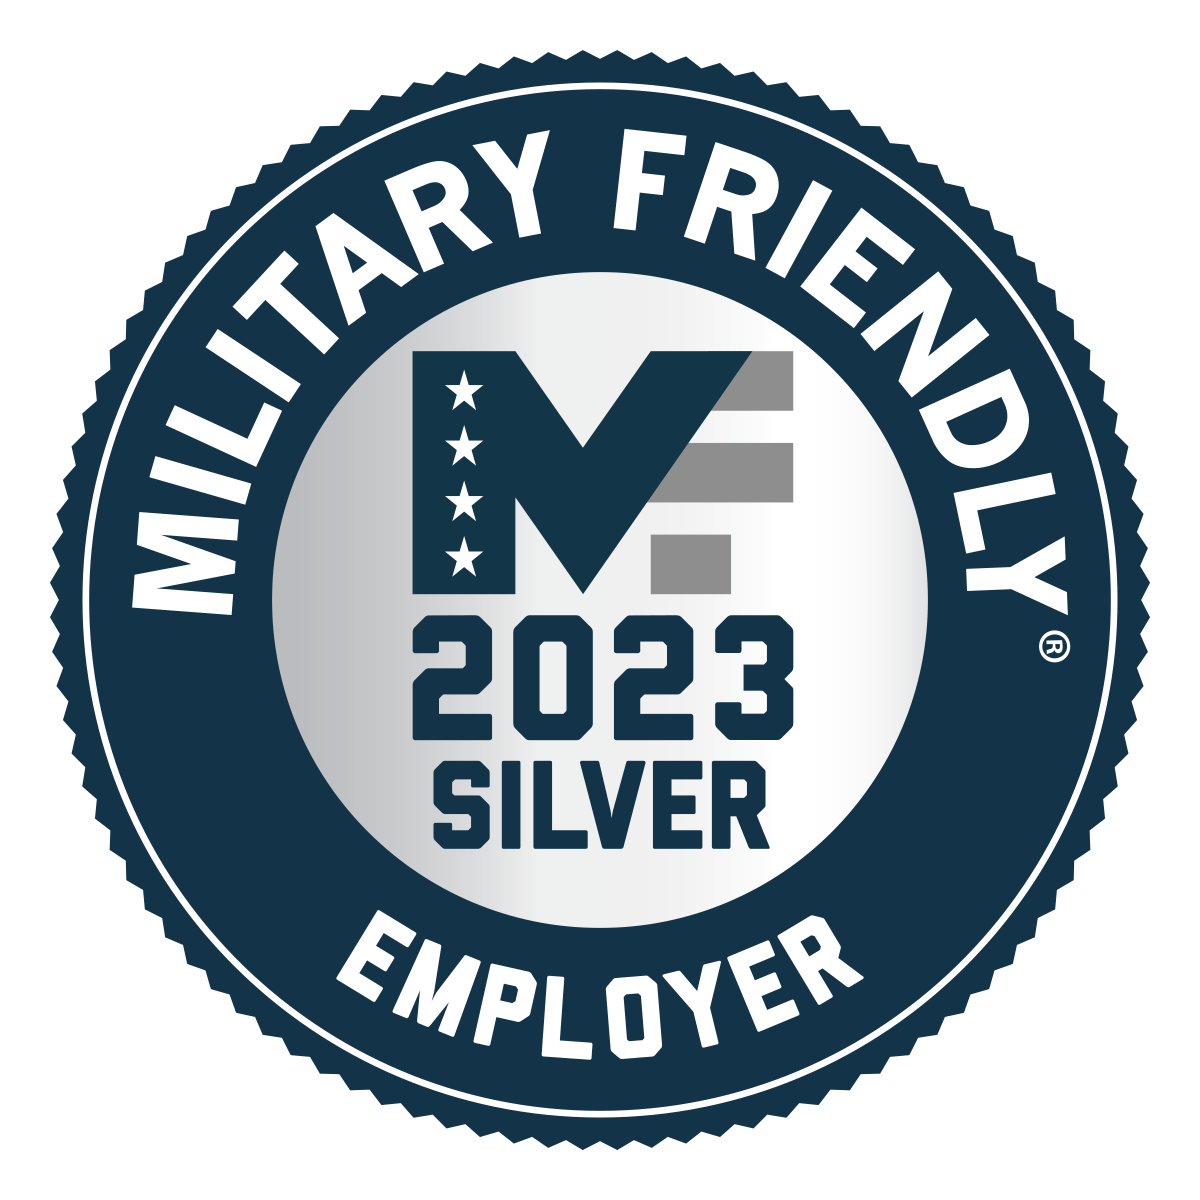 Military Friendly Silver Employer 2023